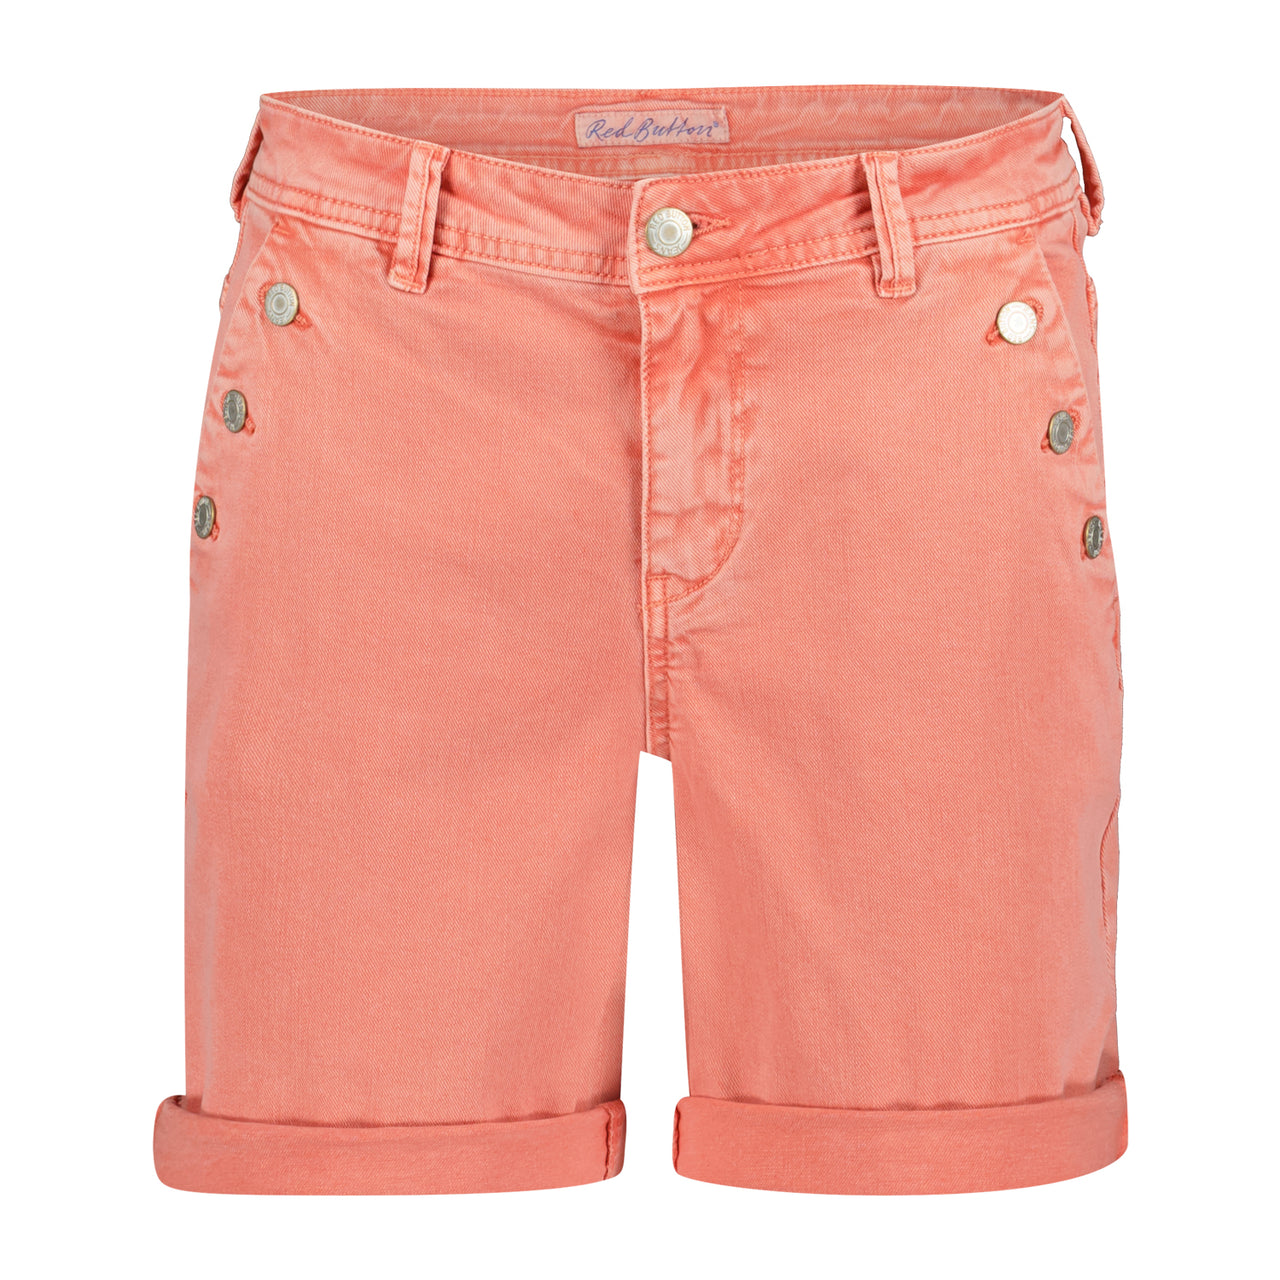 Red Button Bibette Denim Shorts - Flamingo